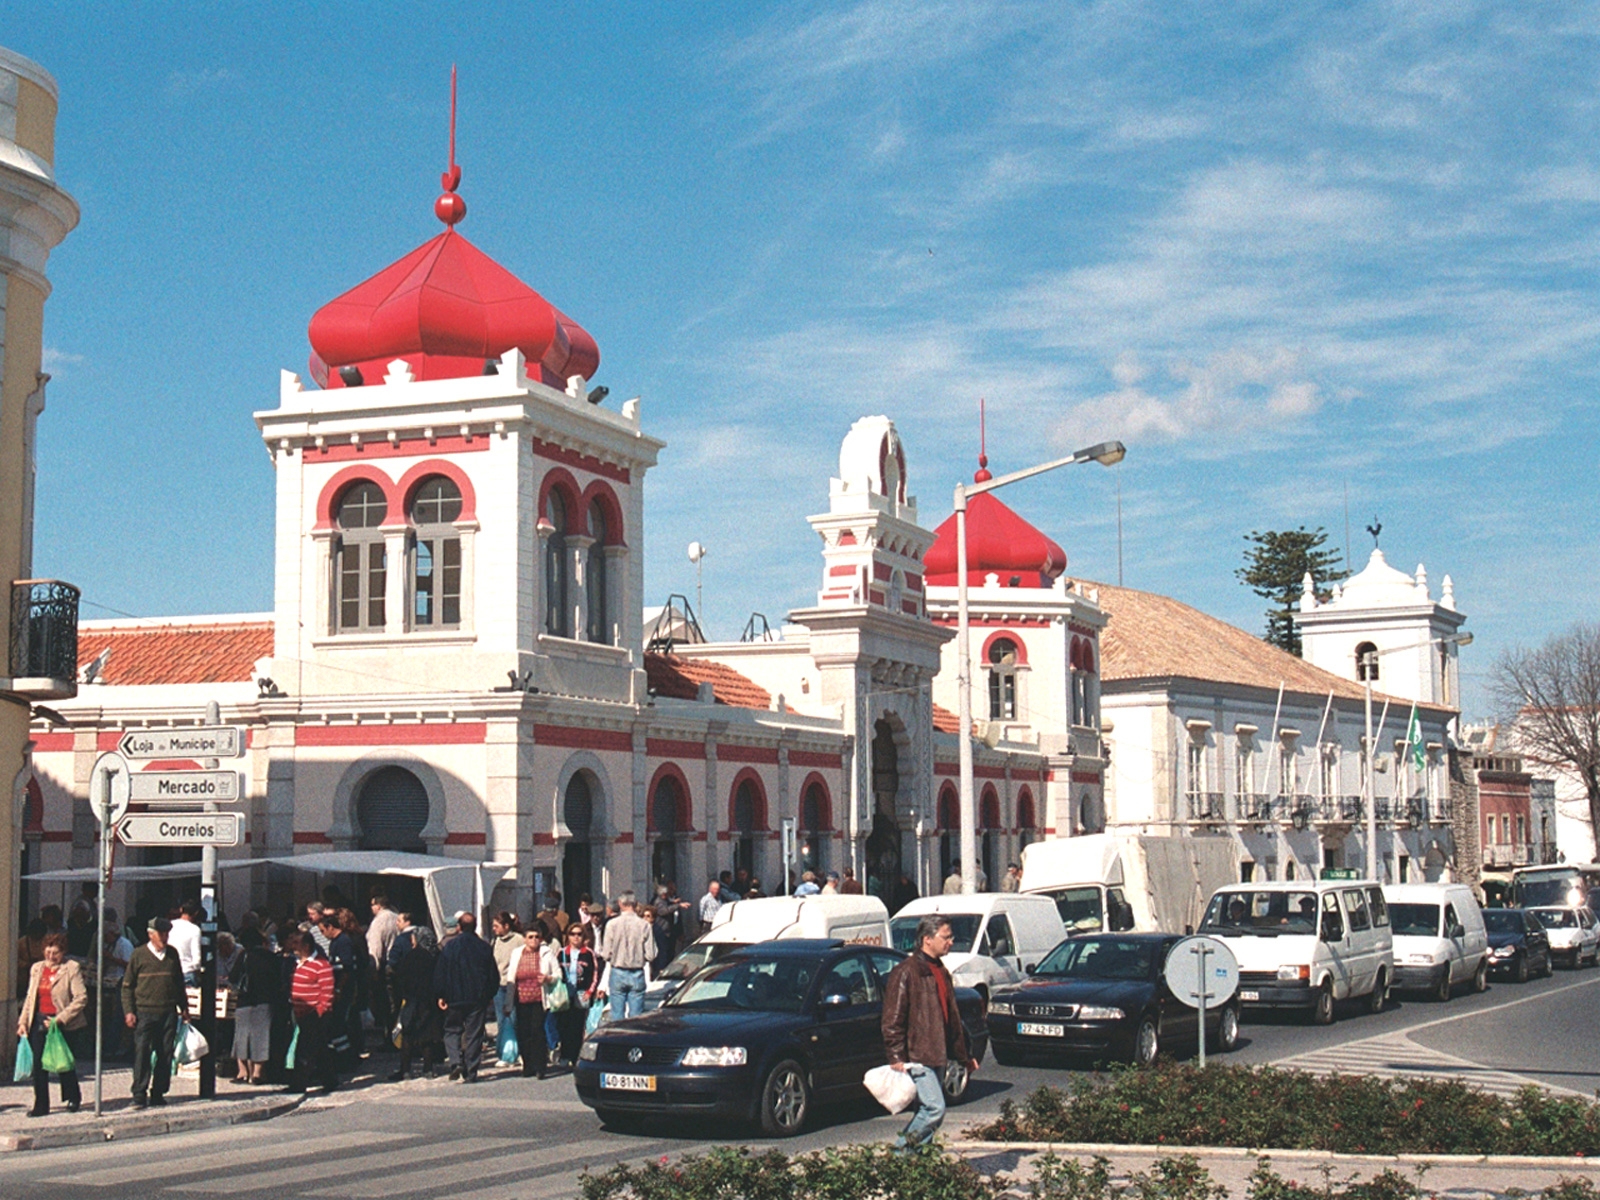 Loulé: Municipal market and town hall